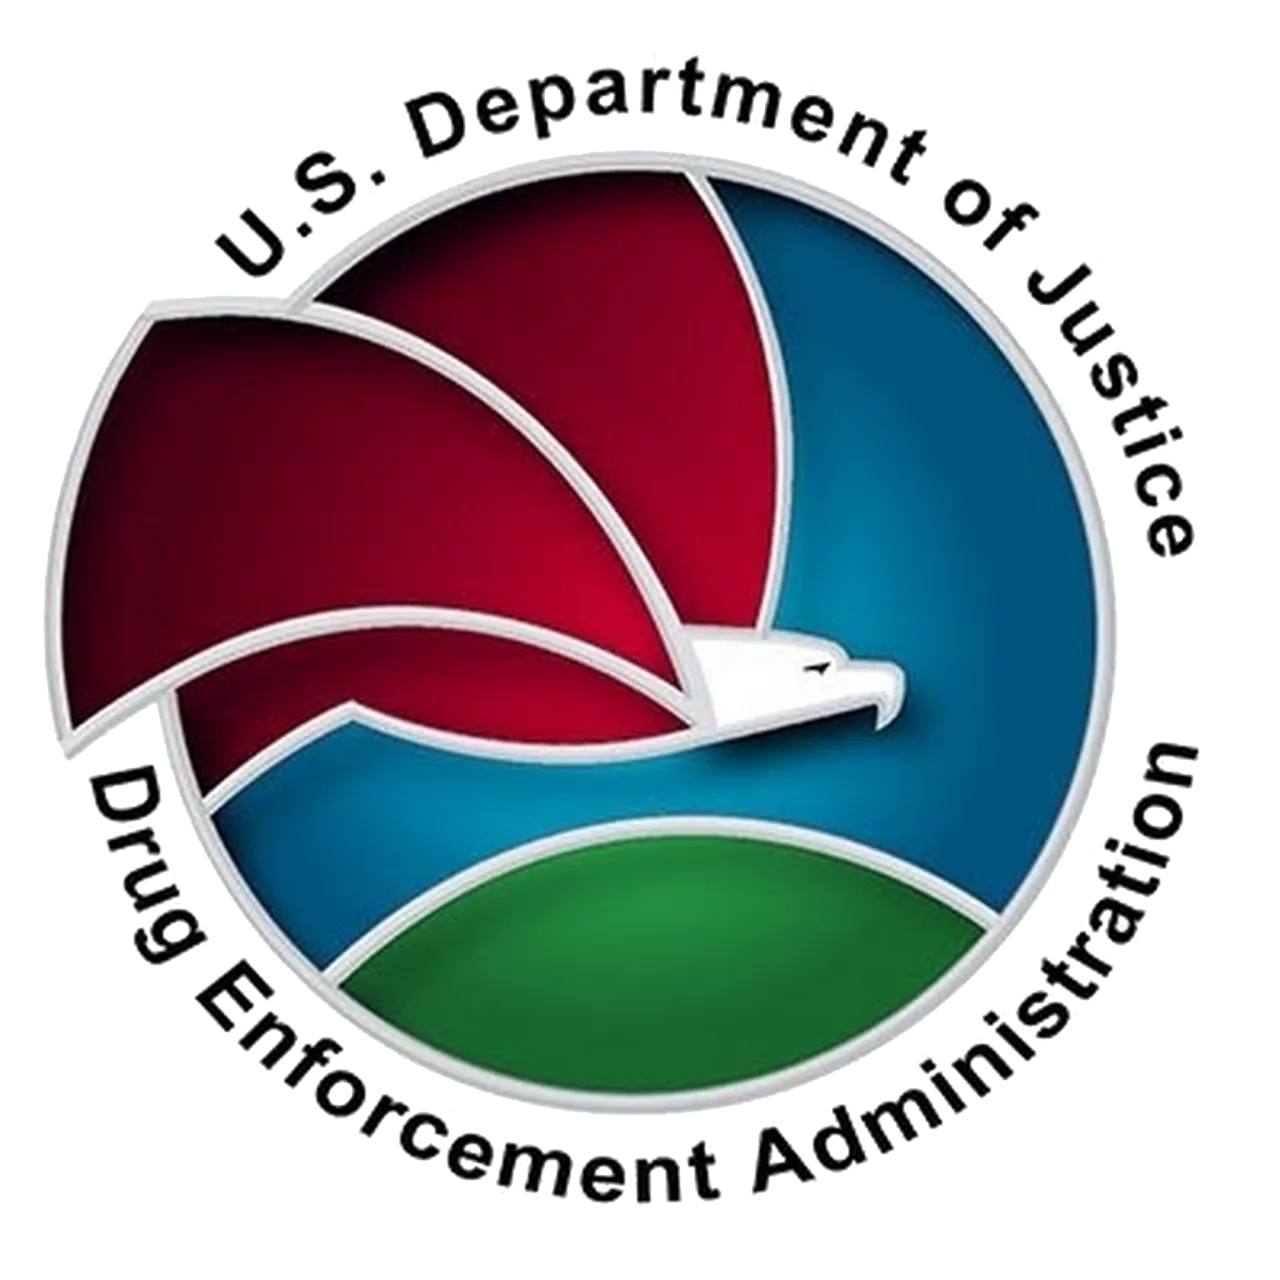 DEA (Drug Enforcement Administration) Logo